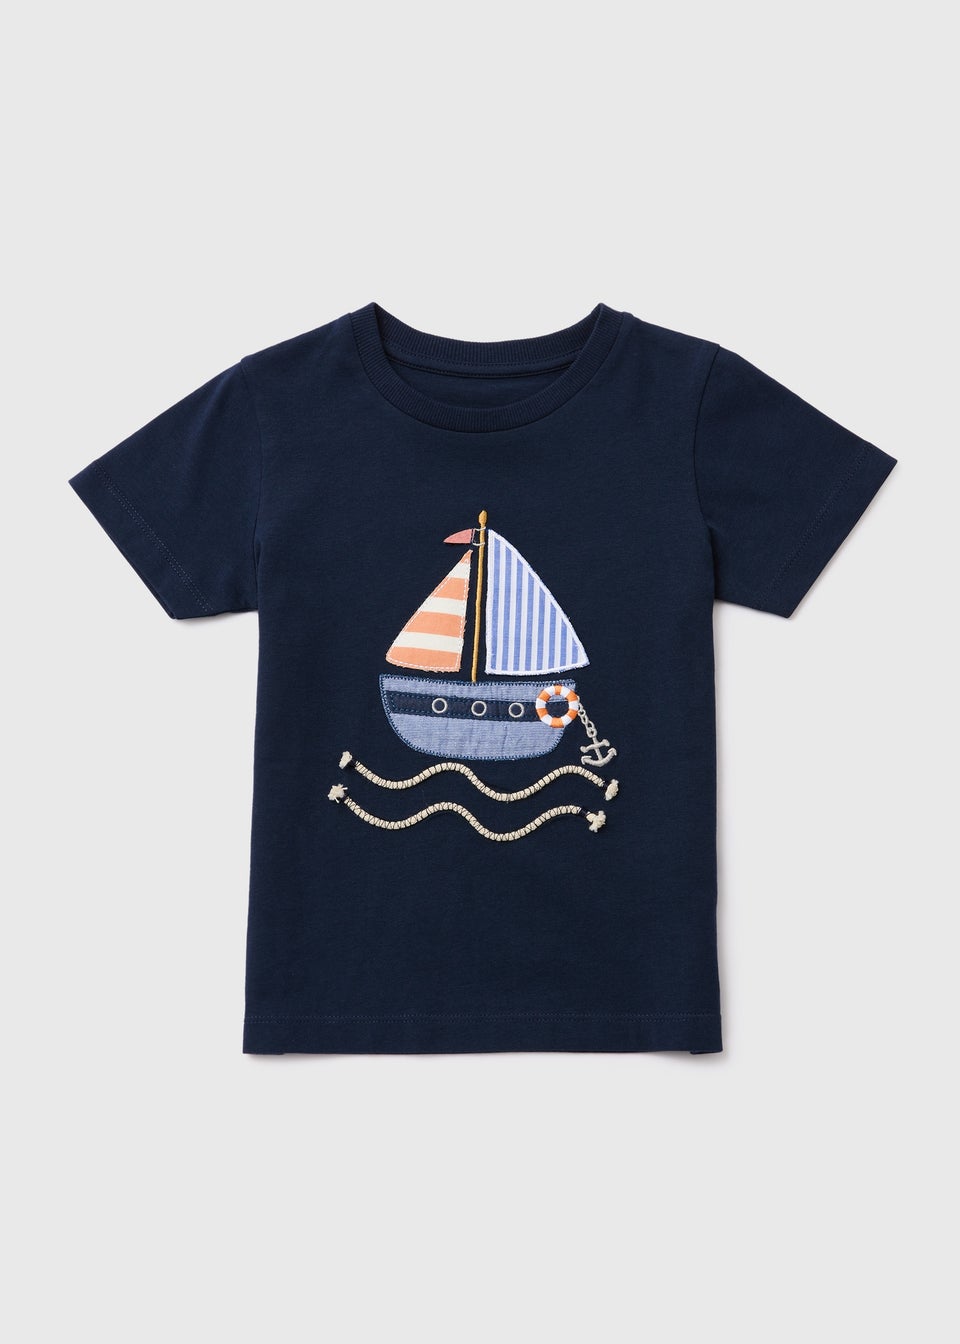 Boys Navy Boat Rope Print T-Shirt (1-7yrs)